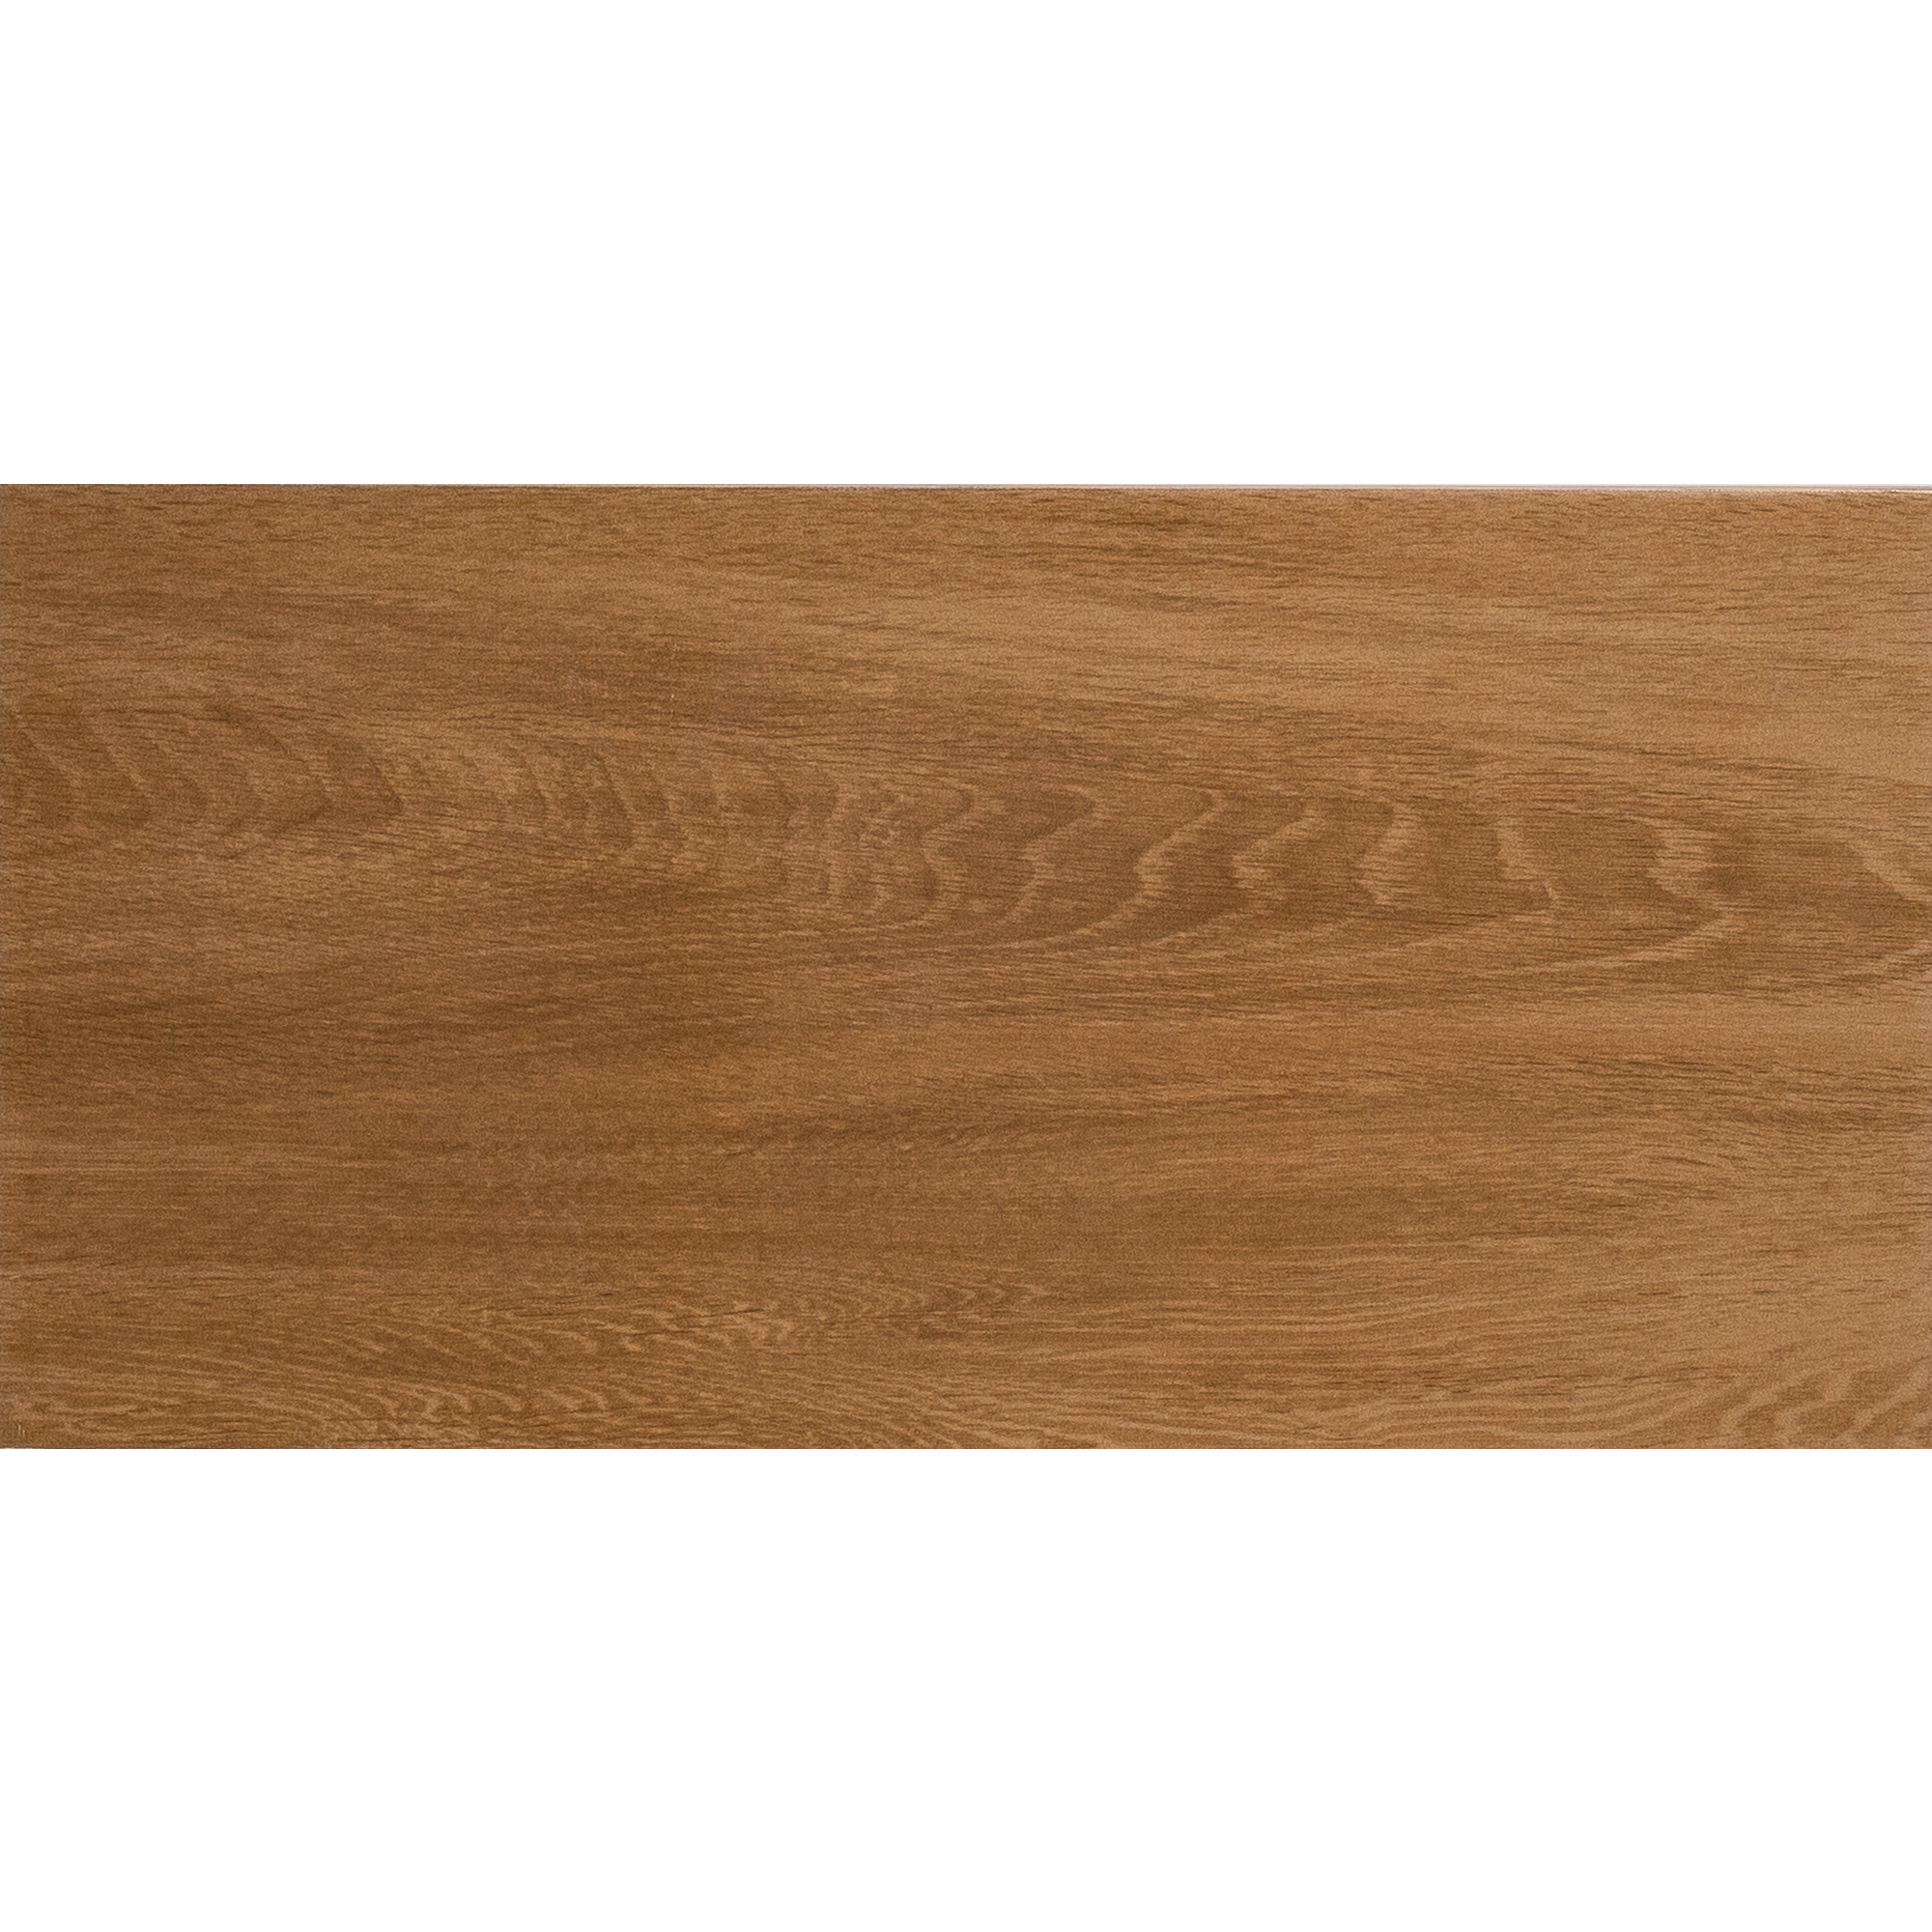 84013526 Настенная плитка Asana Wood Кор 20х40 см 1.2 м² цвет коричневый STLM-0046162 CULTO